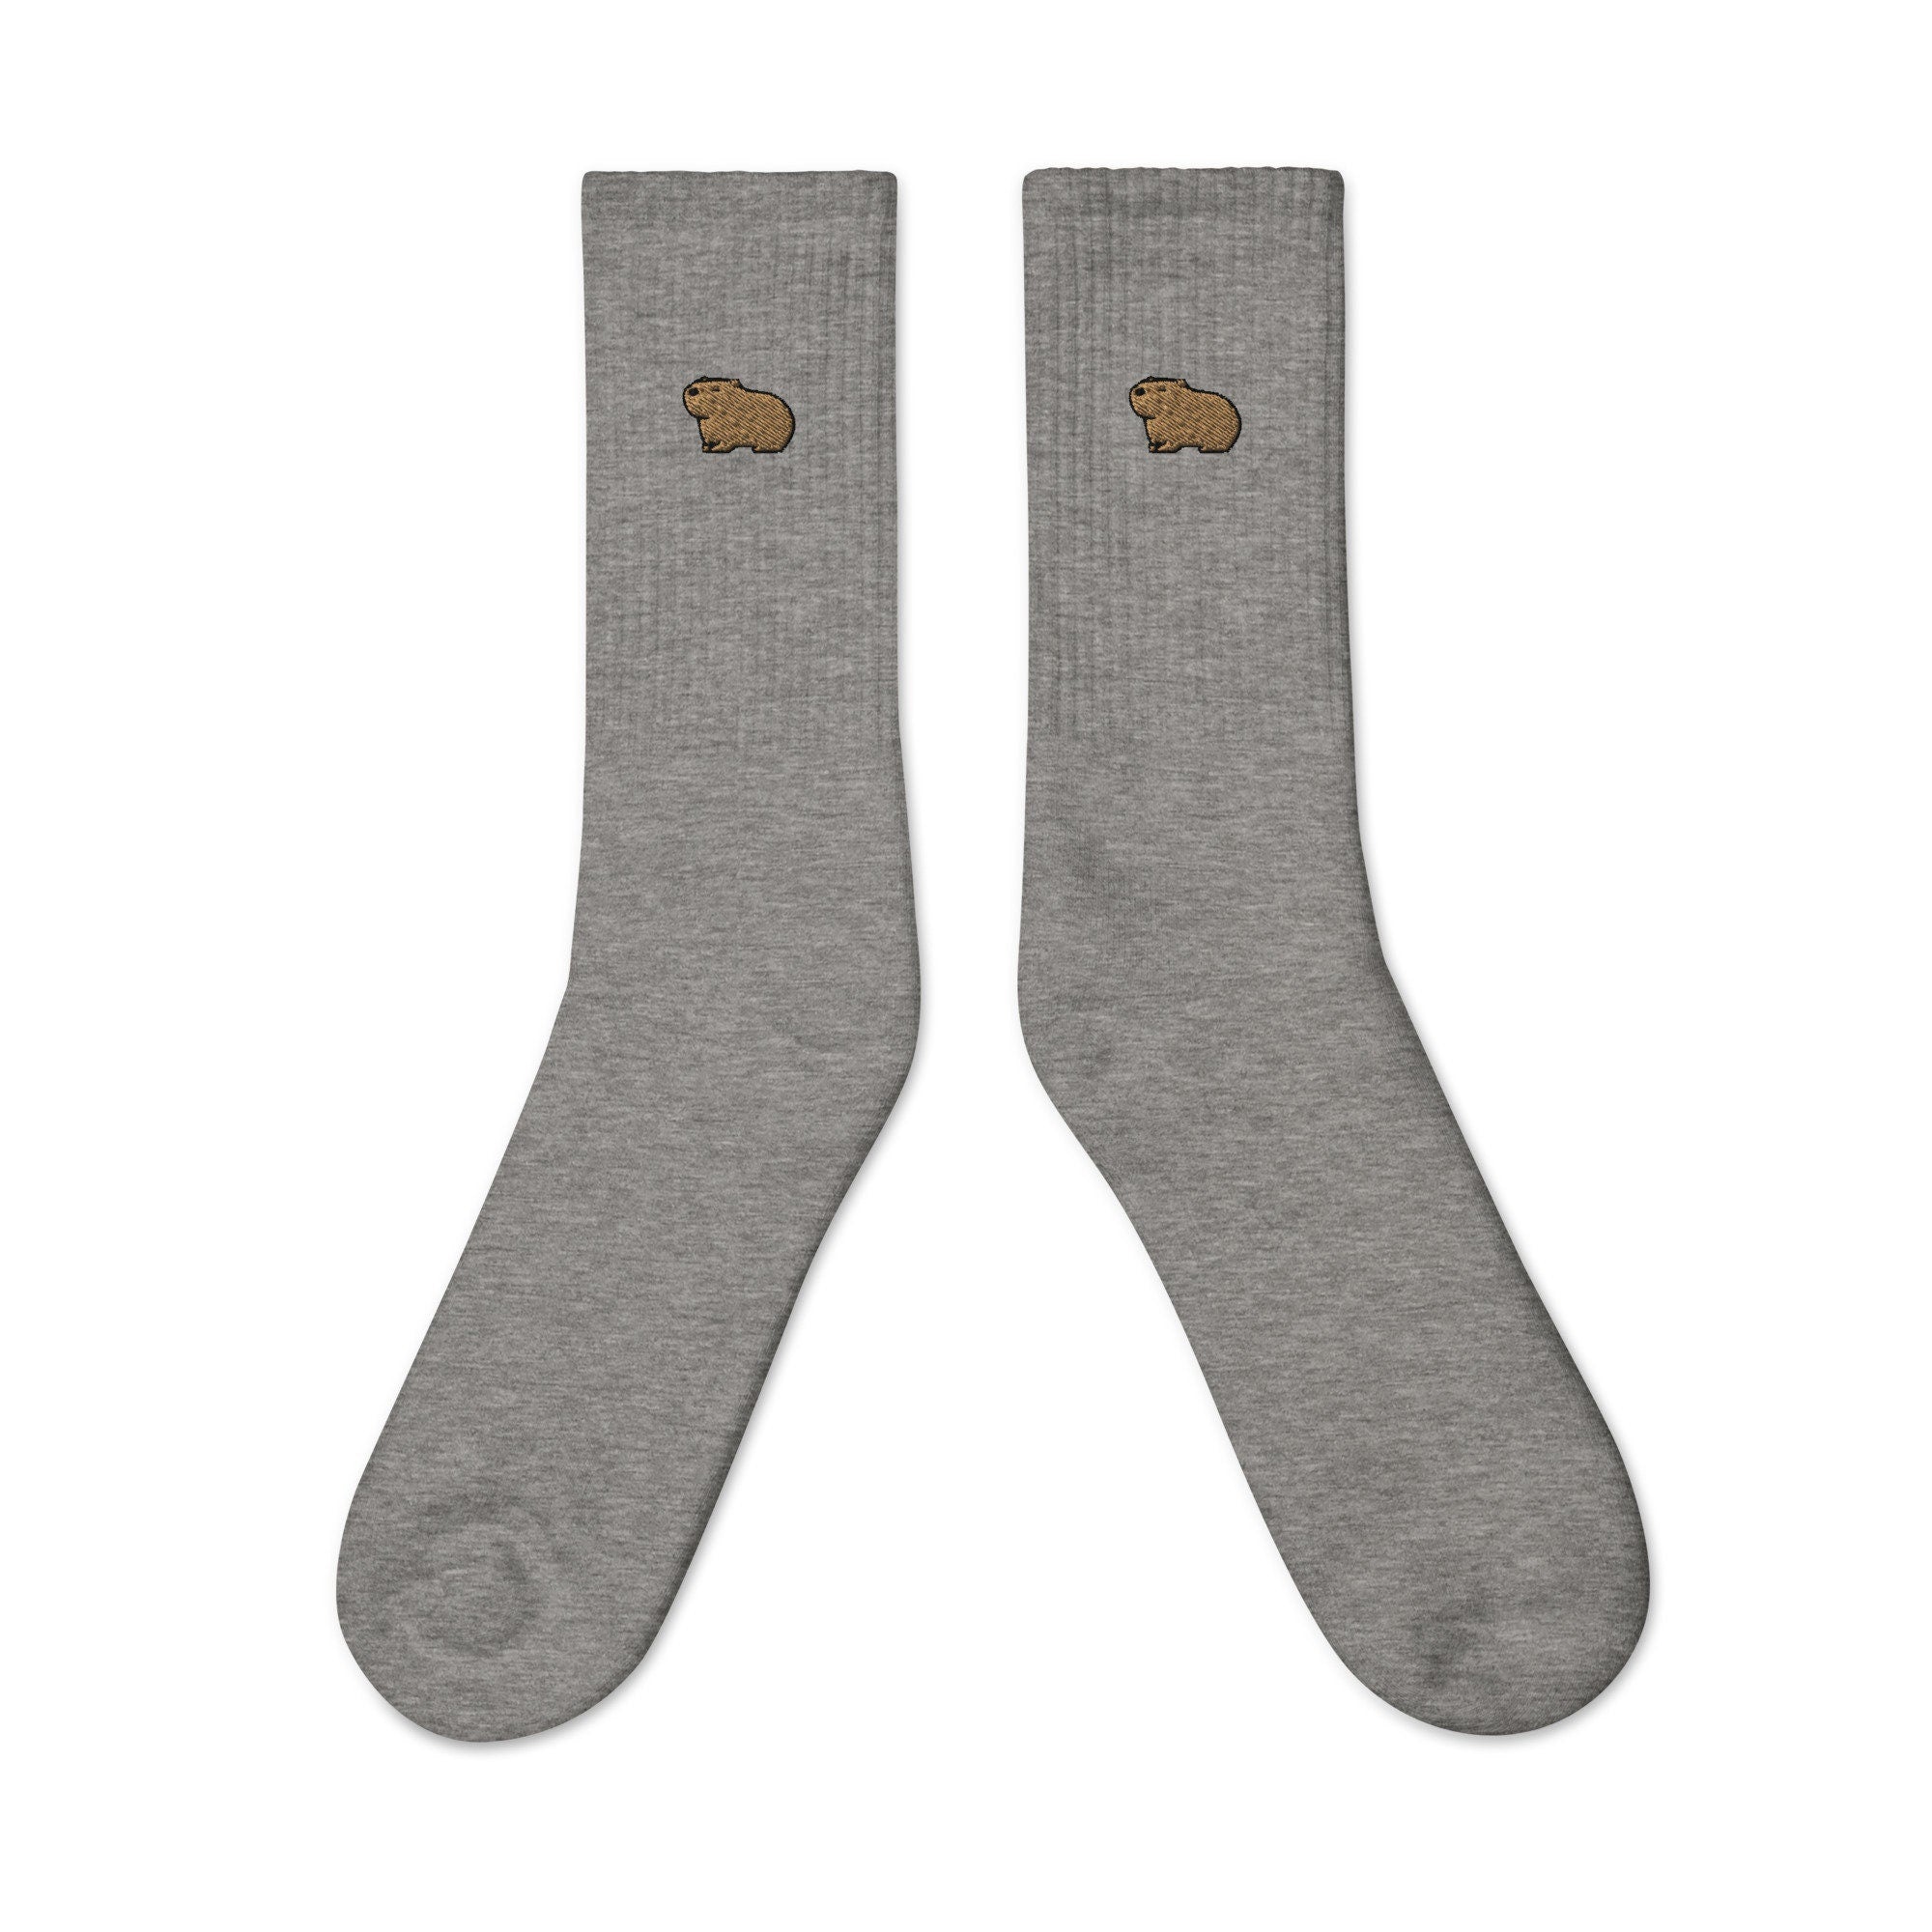 Capybara Embroidered Socks, Premium Embroidered Socks, Long Socks Gift - Multiple Colors